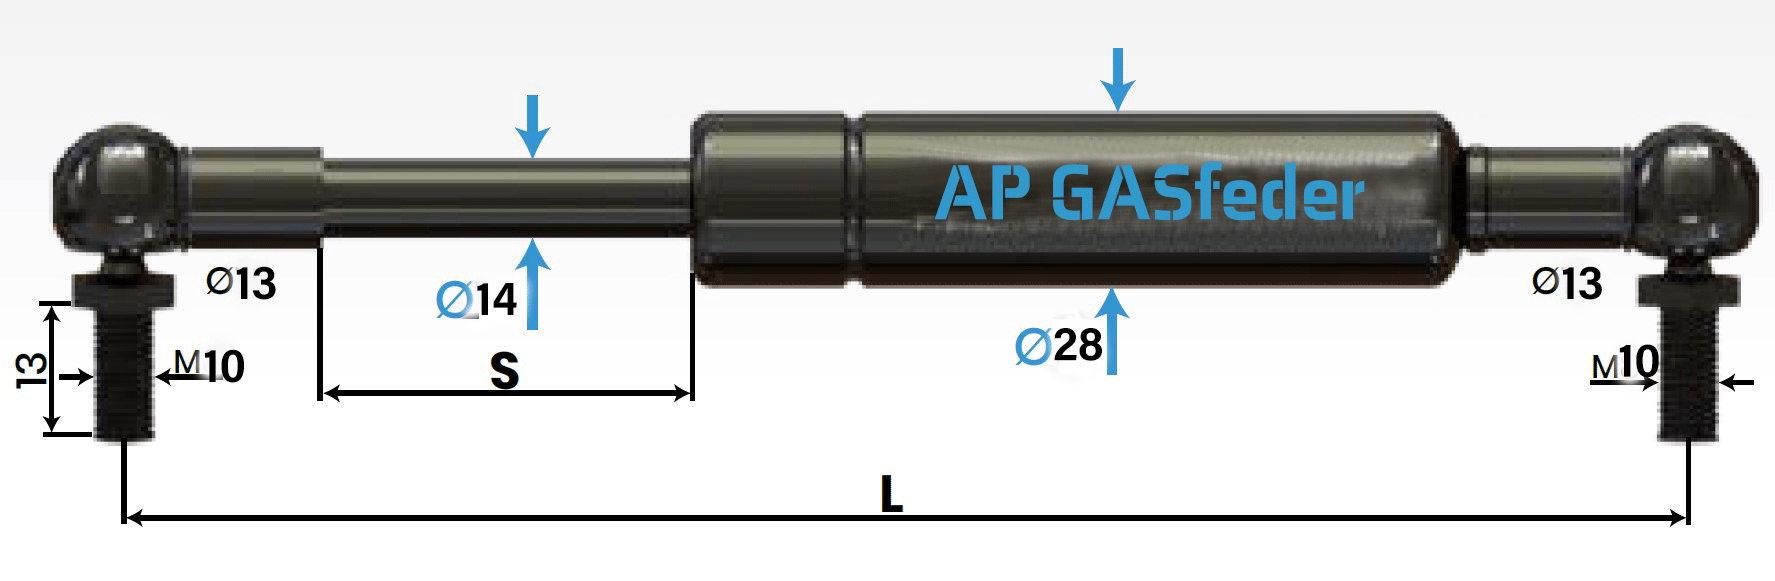 Imagen de AP GASfeder 1500N, 14/28, Hub(S): 150 mm, Länge (L): 435 mm,  Alternatvie SRST.2362LI